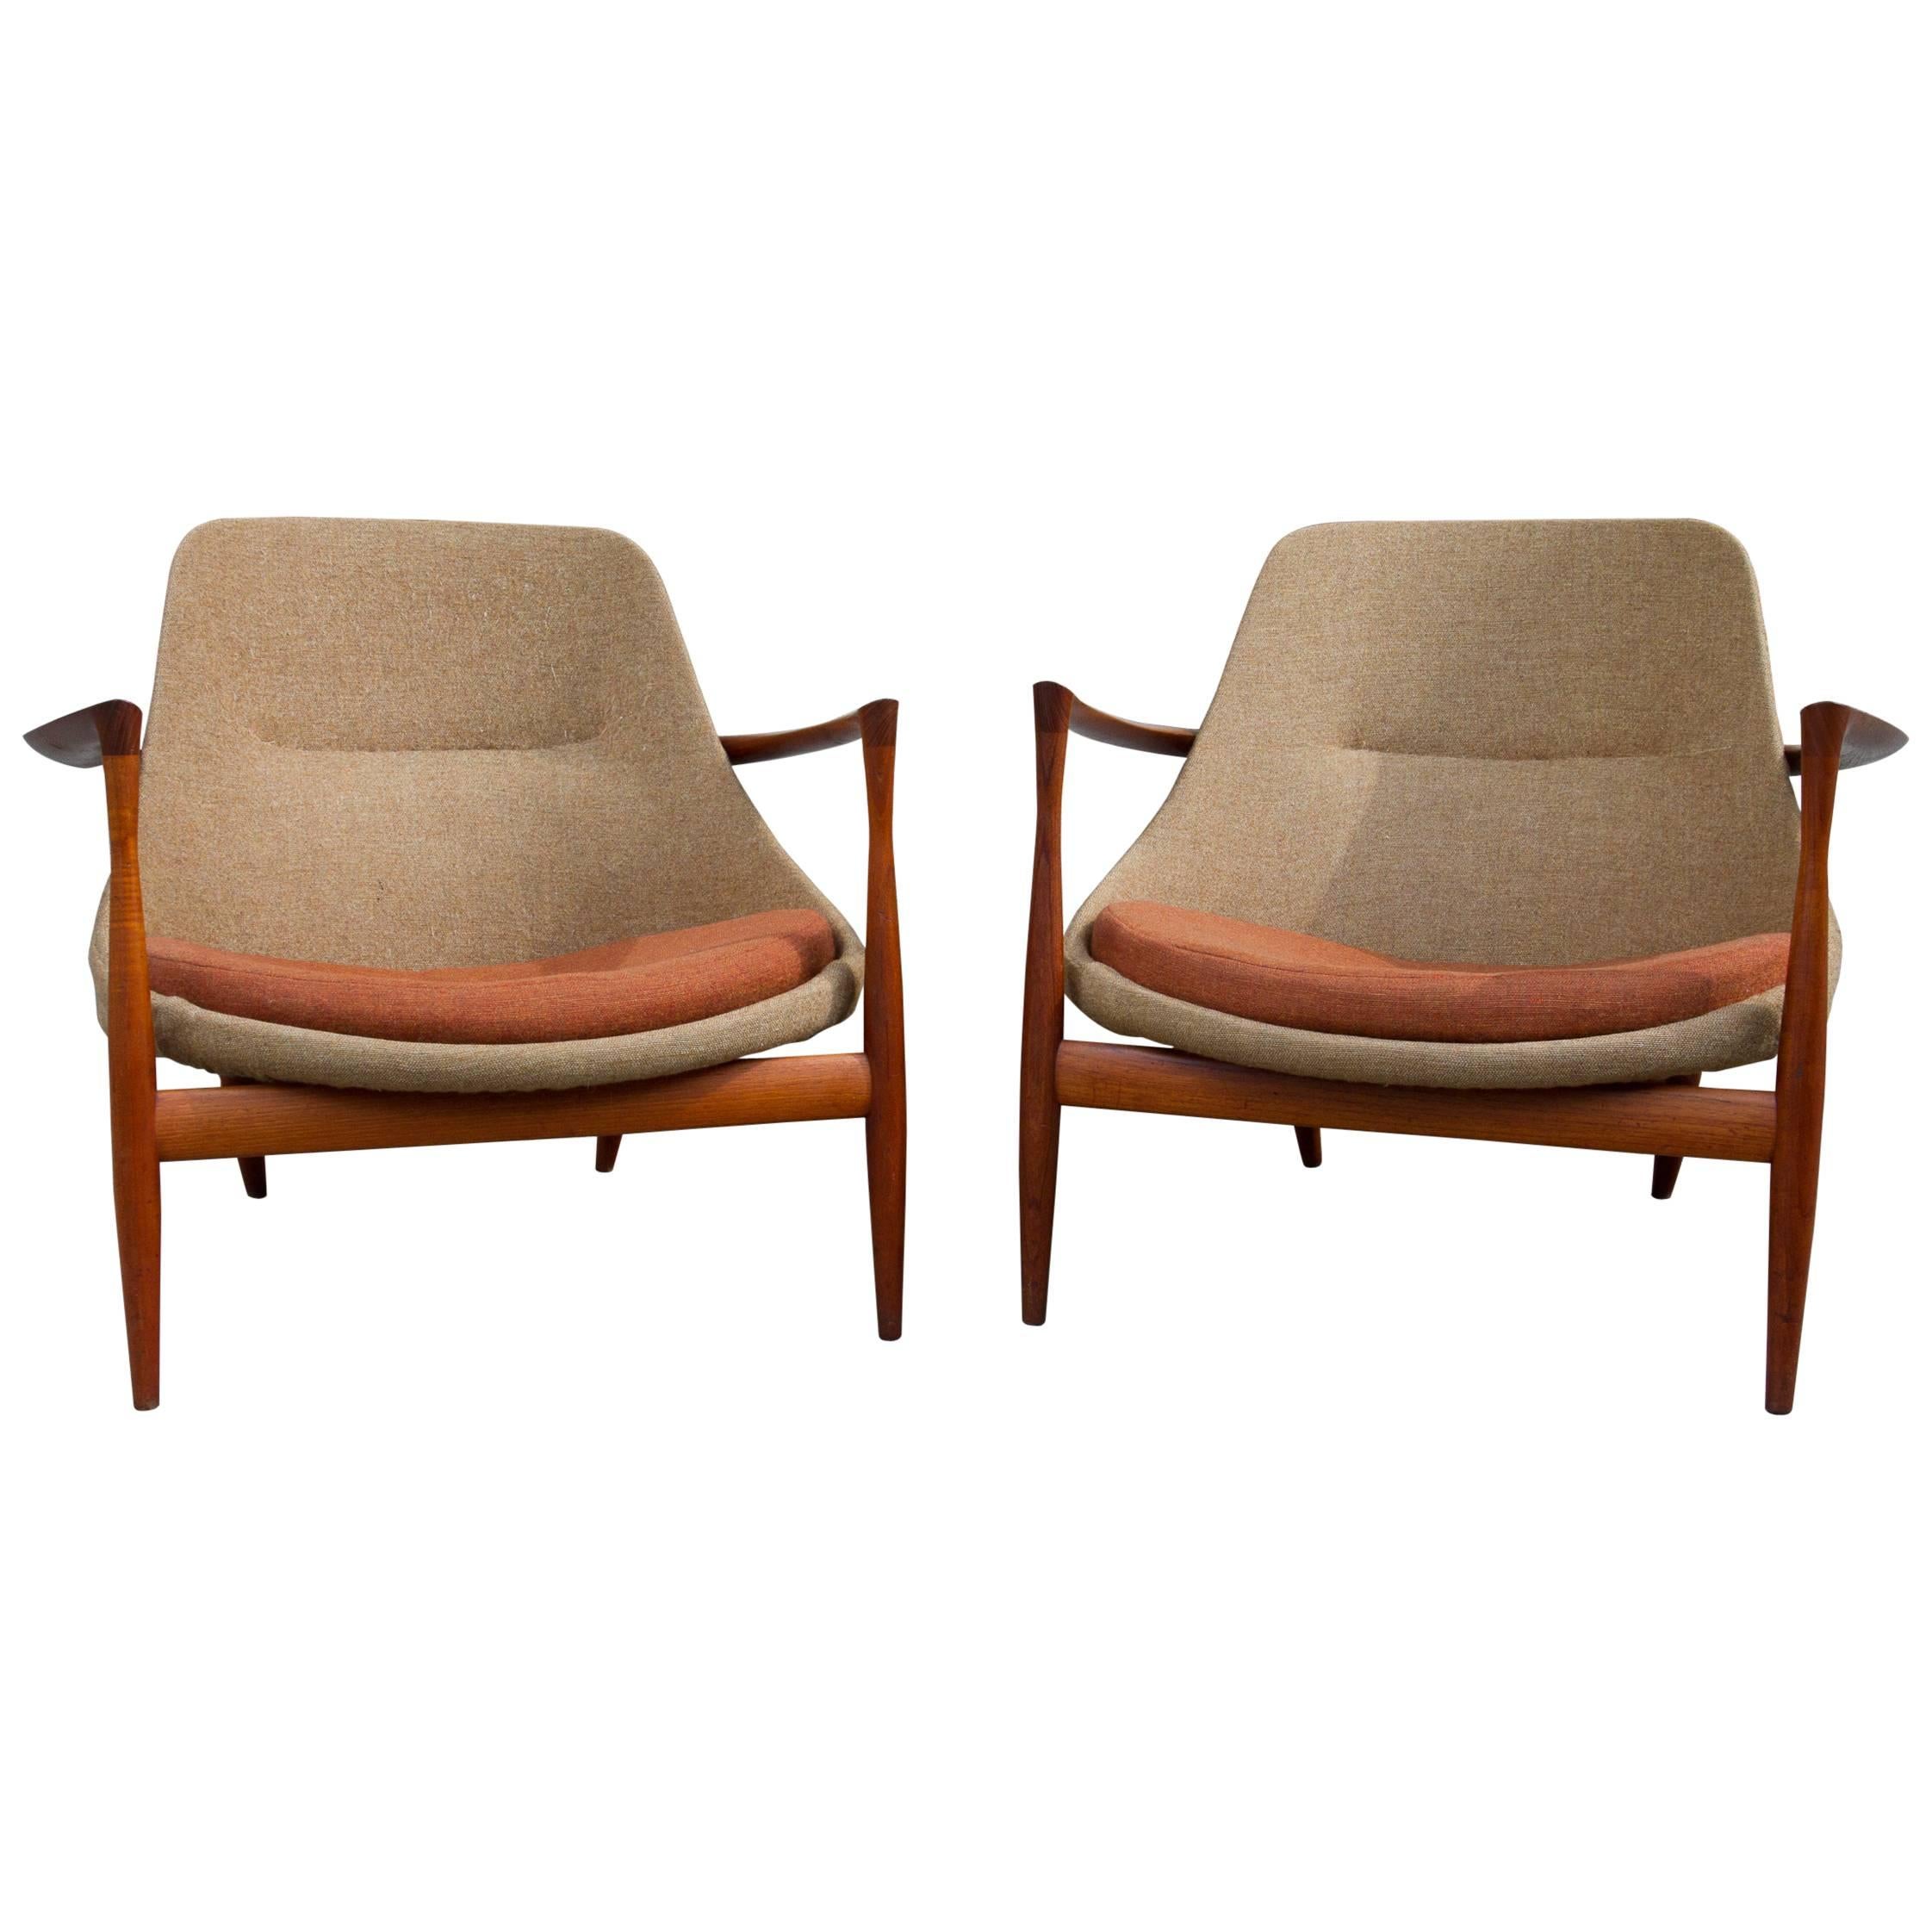 Exceptional Pair of Teak Kofod-Larsen Elizabeth Chairs